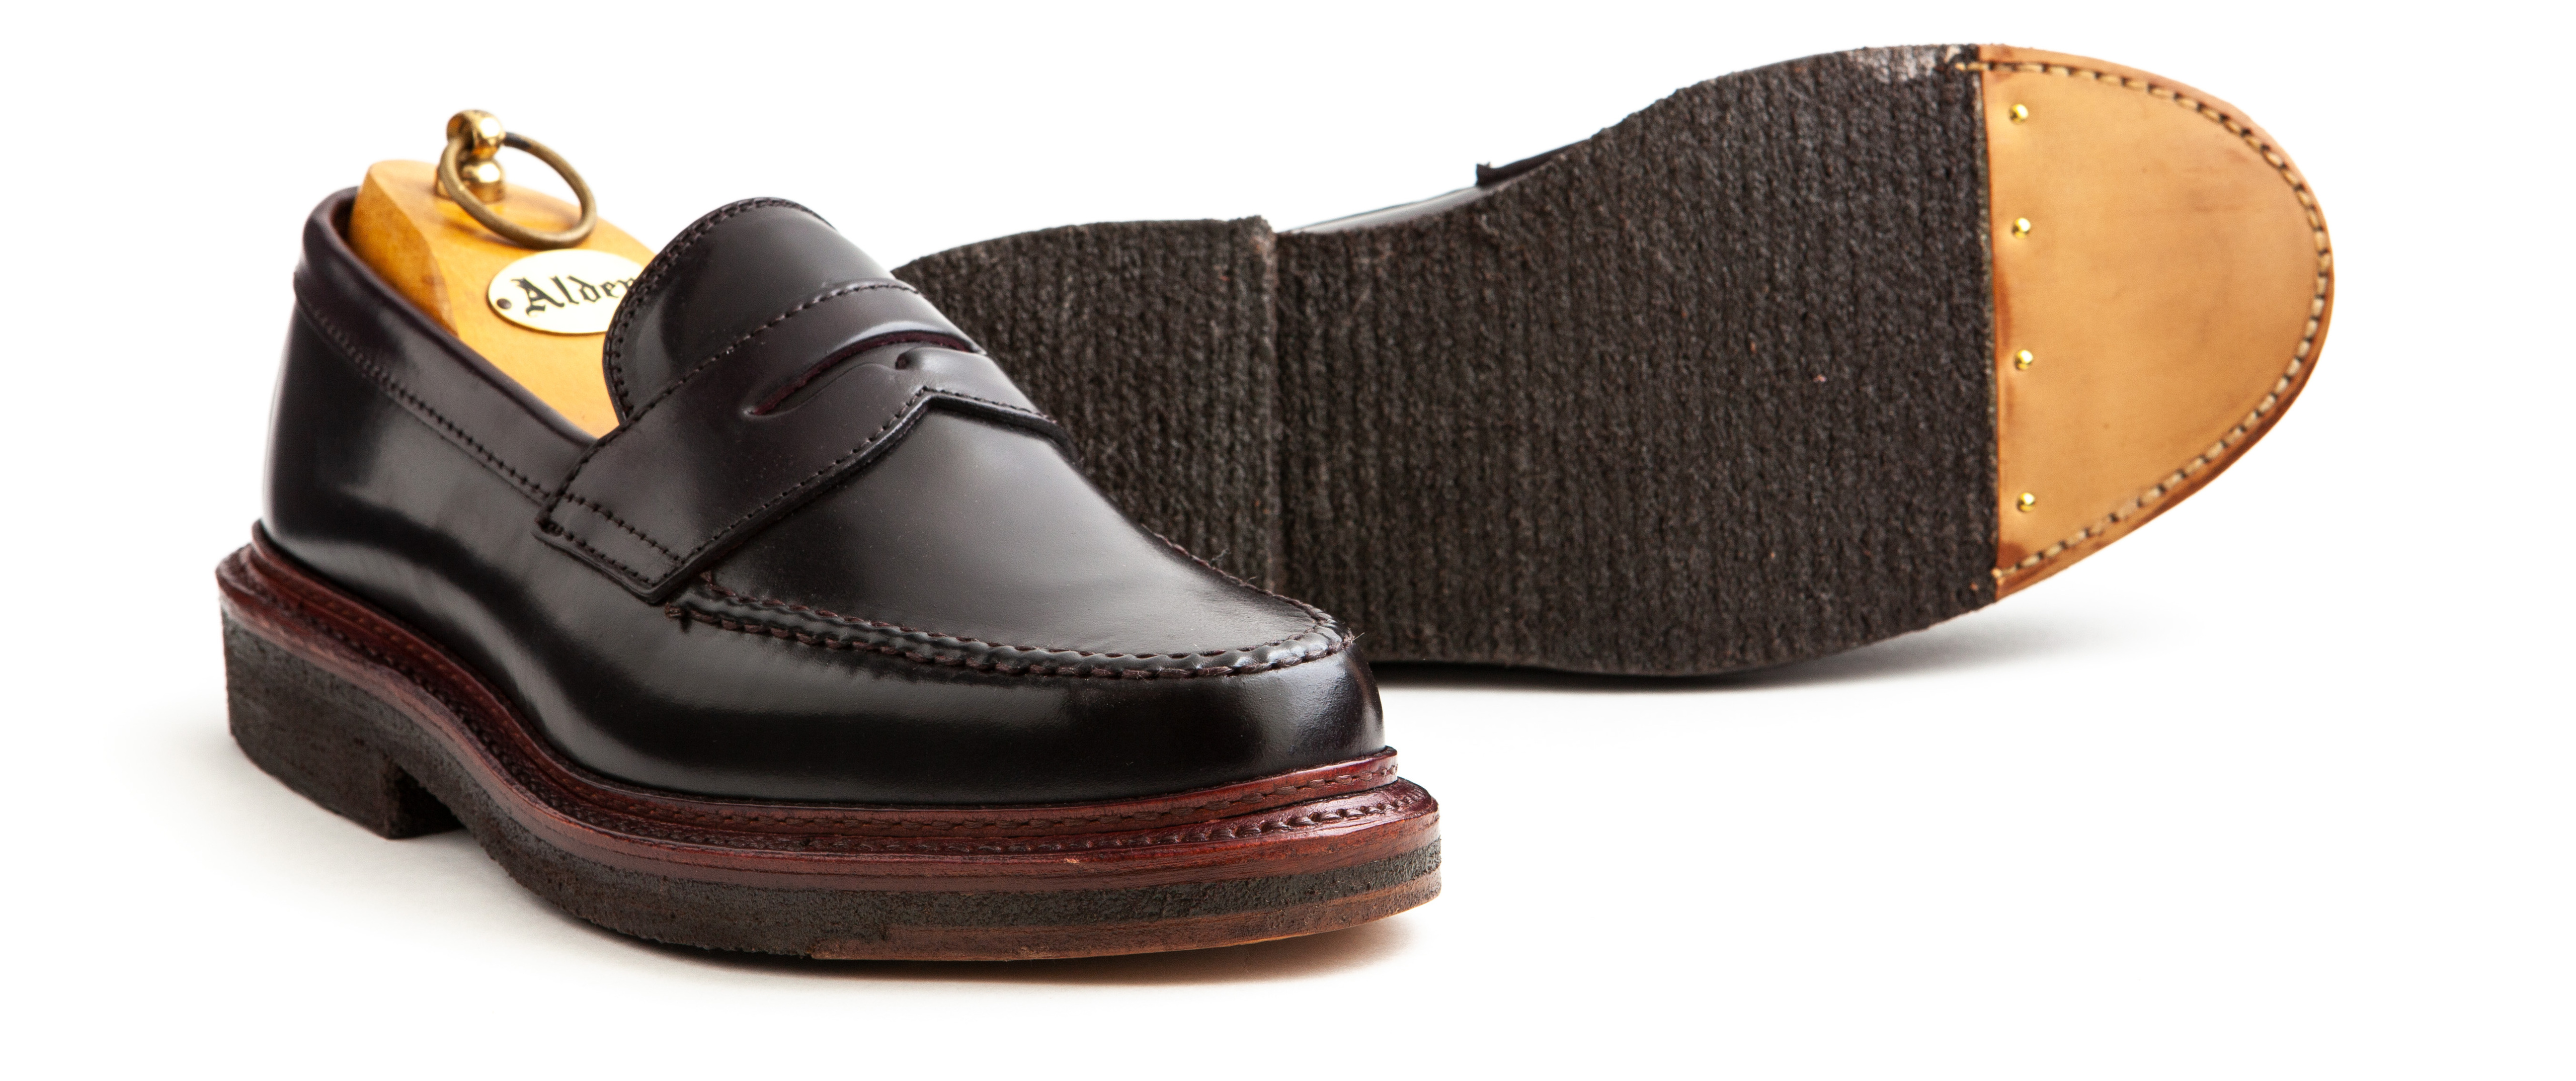  Fiebing's Leather Sole & Heel Edge Dressing - Shoe